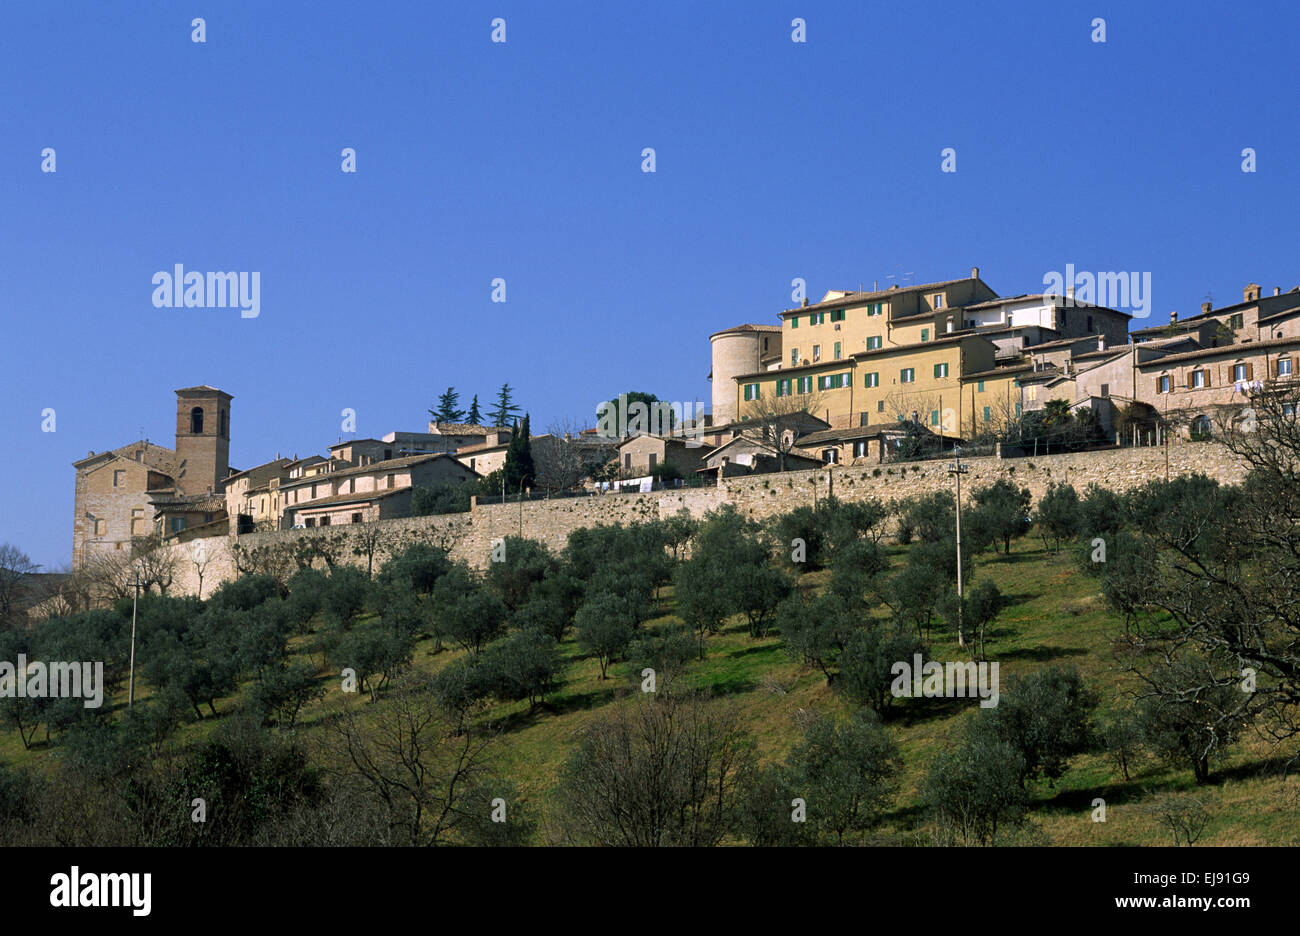 italy, umbria, montefalco Stock Photo - Alamy